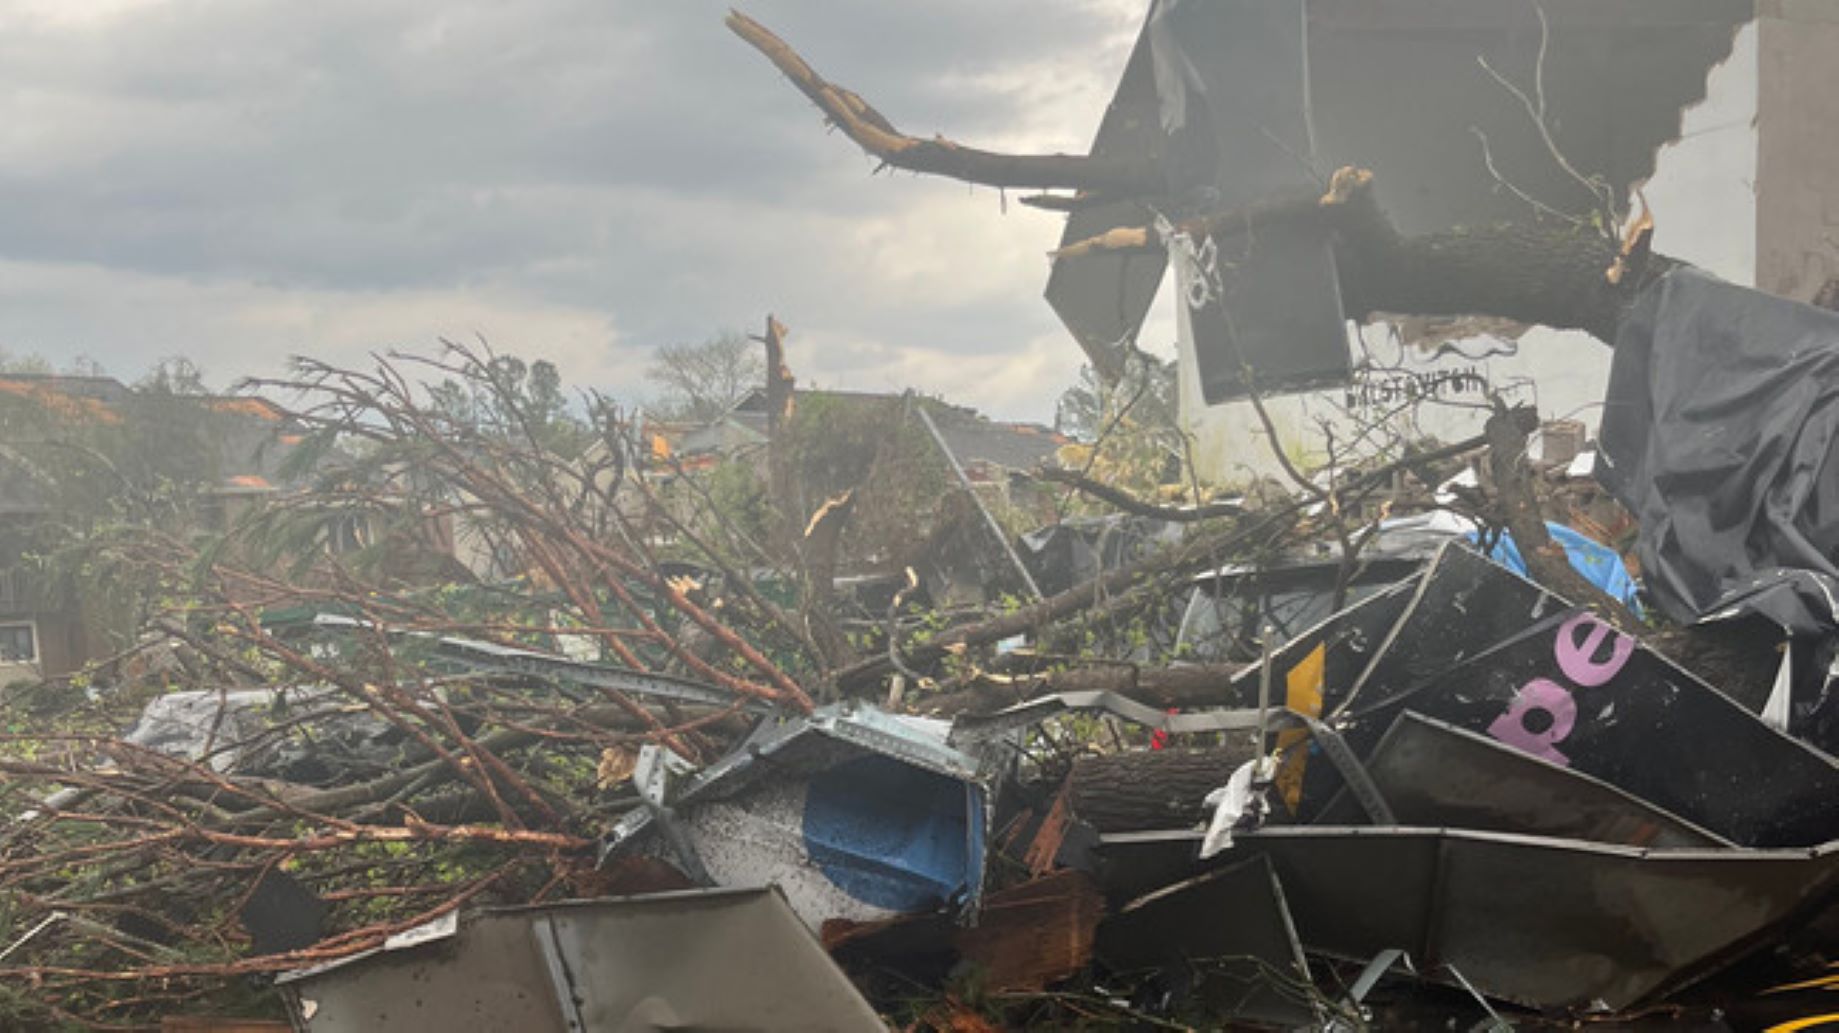 Tornadoes Hit Arkansas, Causing “Catastrophic” Damage